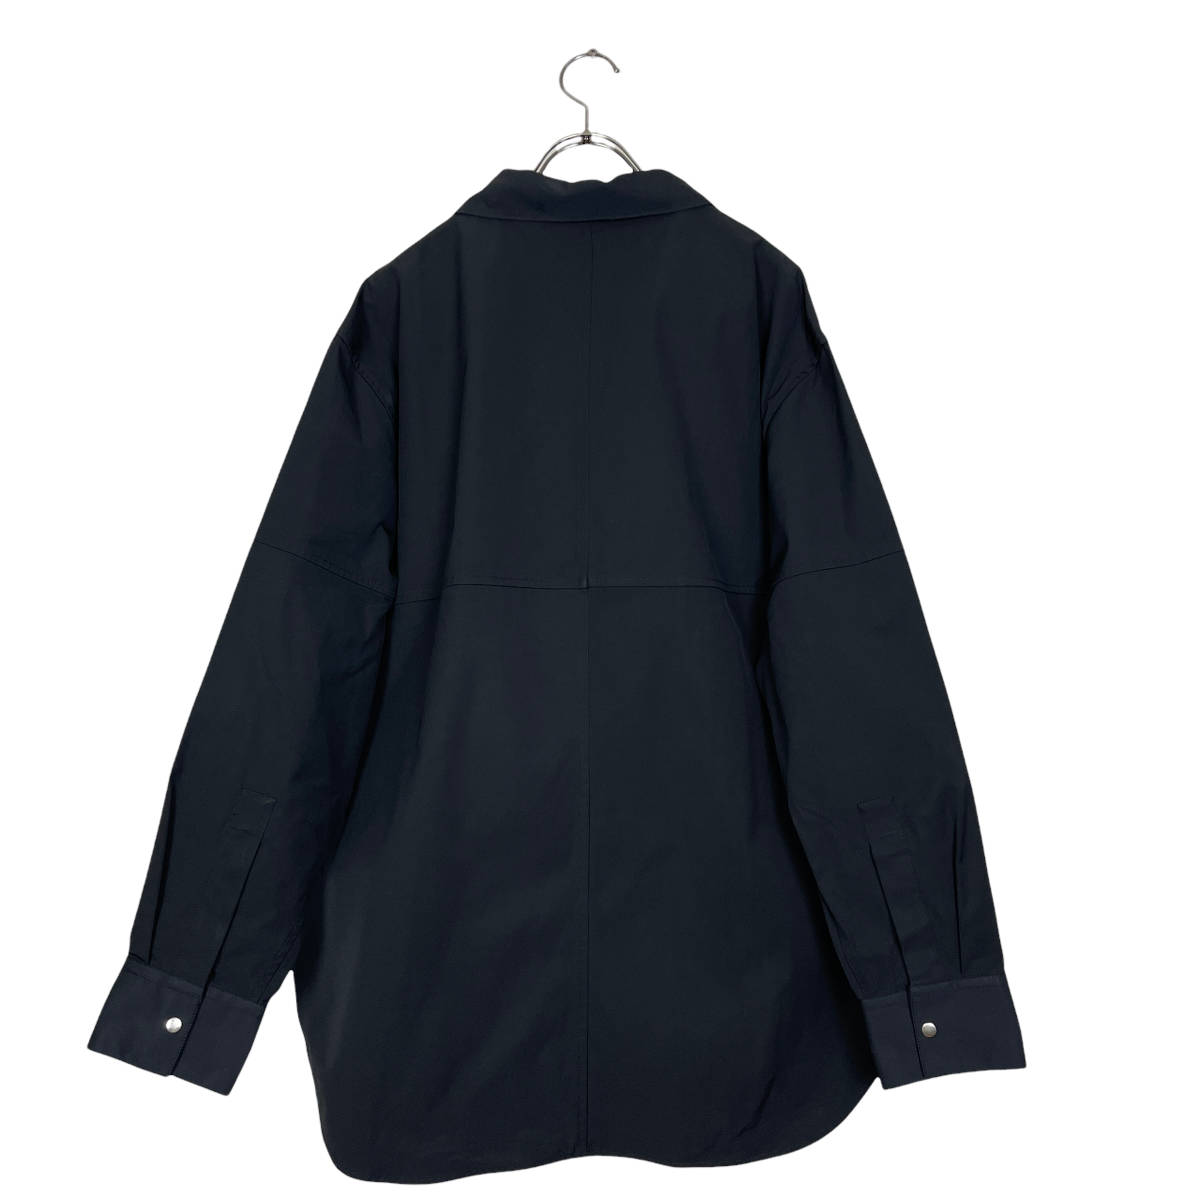 JIL SANDER(ジルサンダー) big silhouette shirts jacket (black